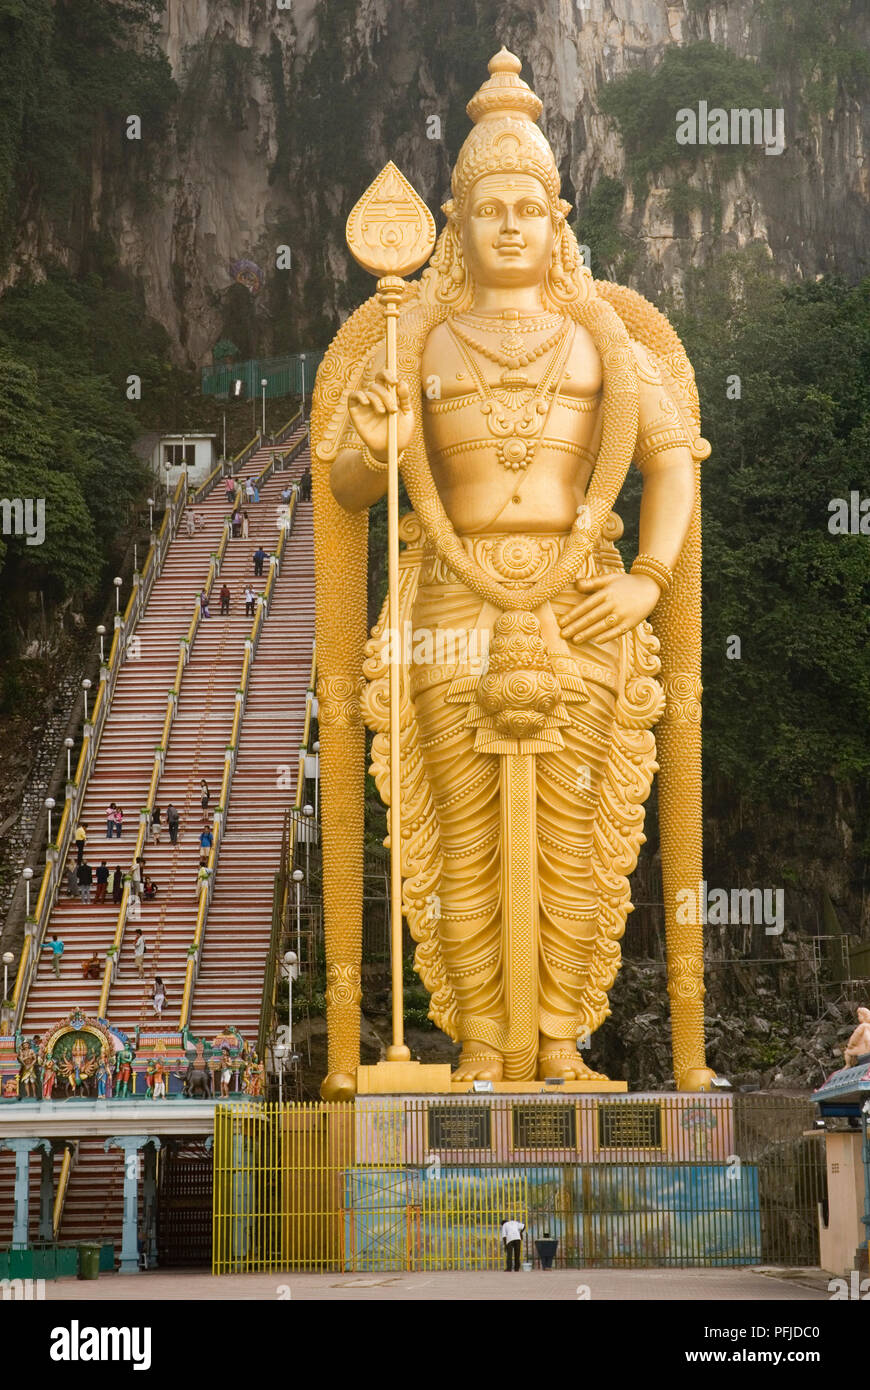 Malaysia, large gold statue of Hindu deity Murugan outside Batu ...